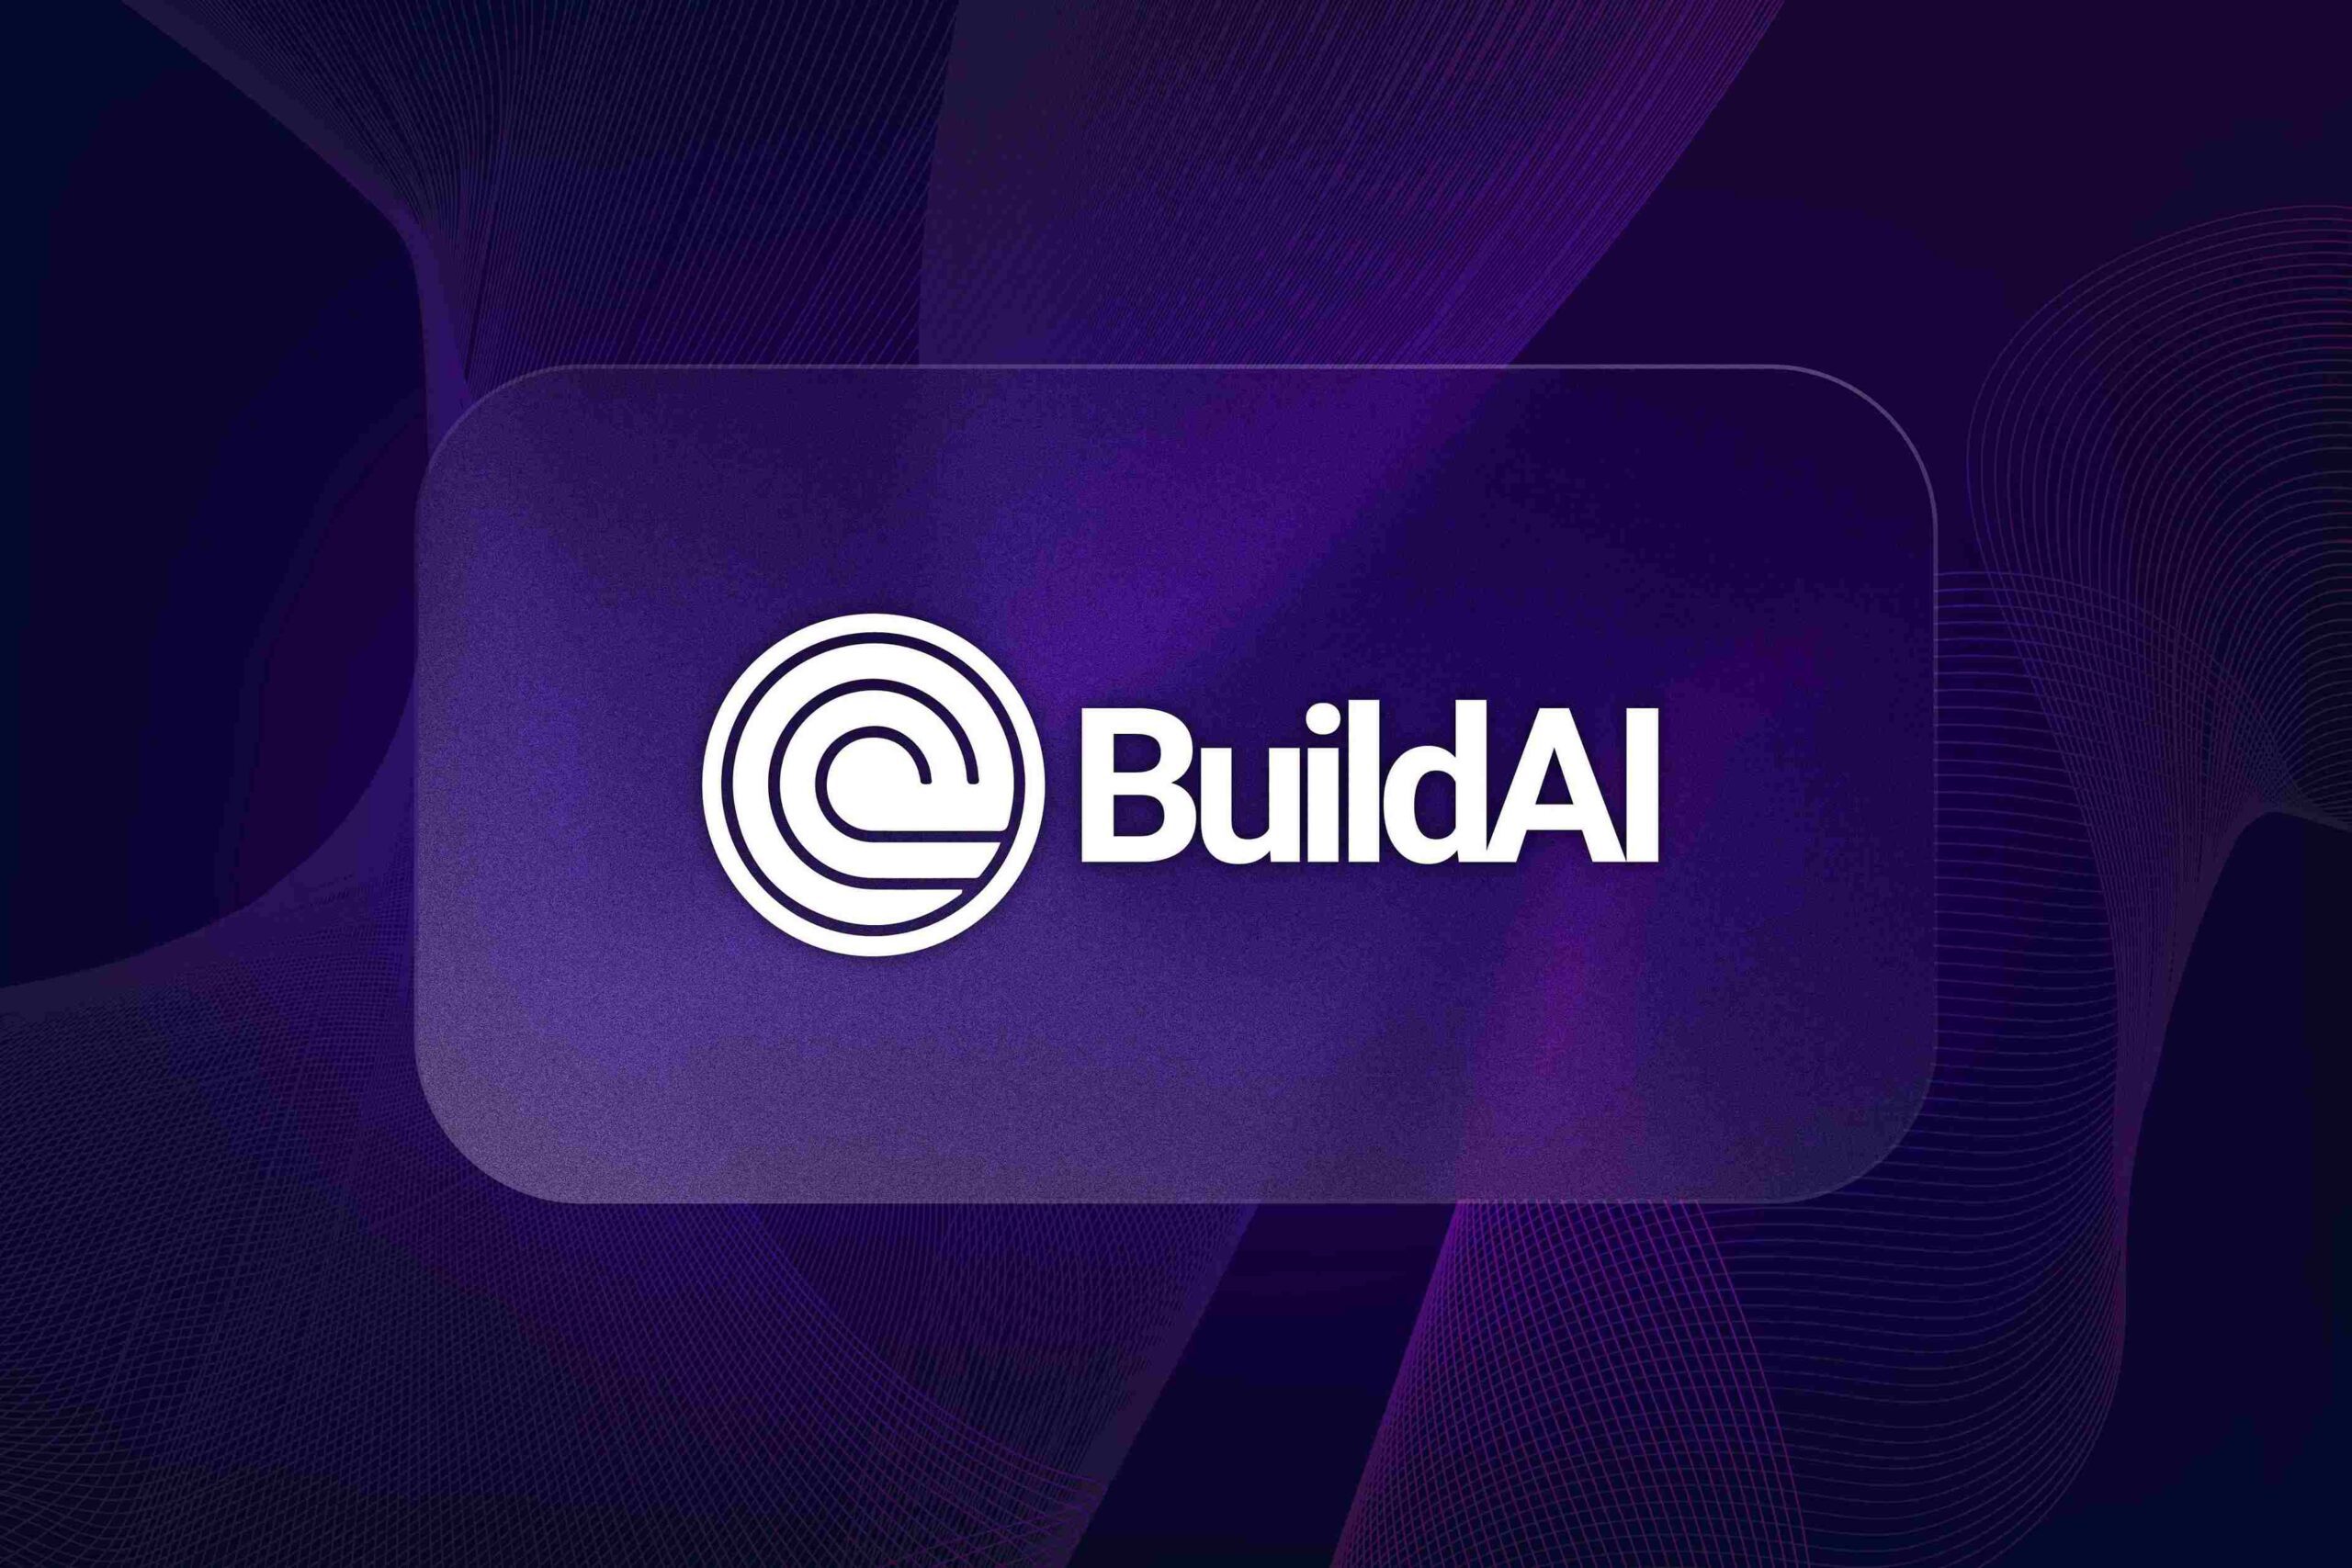 BuildAI